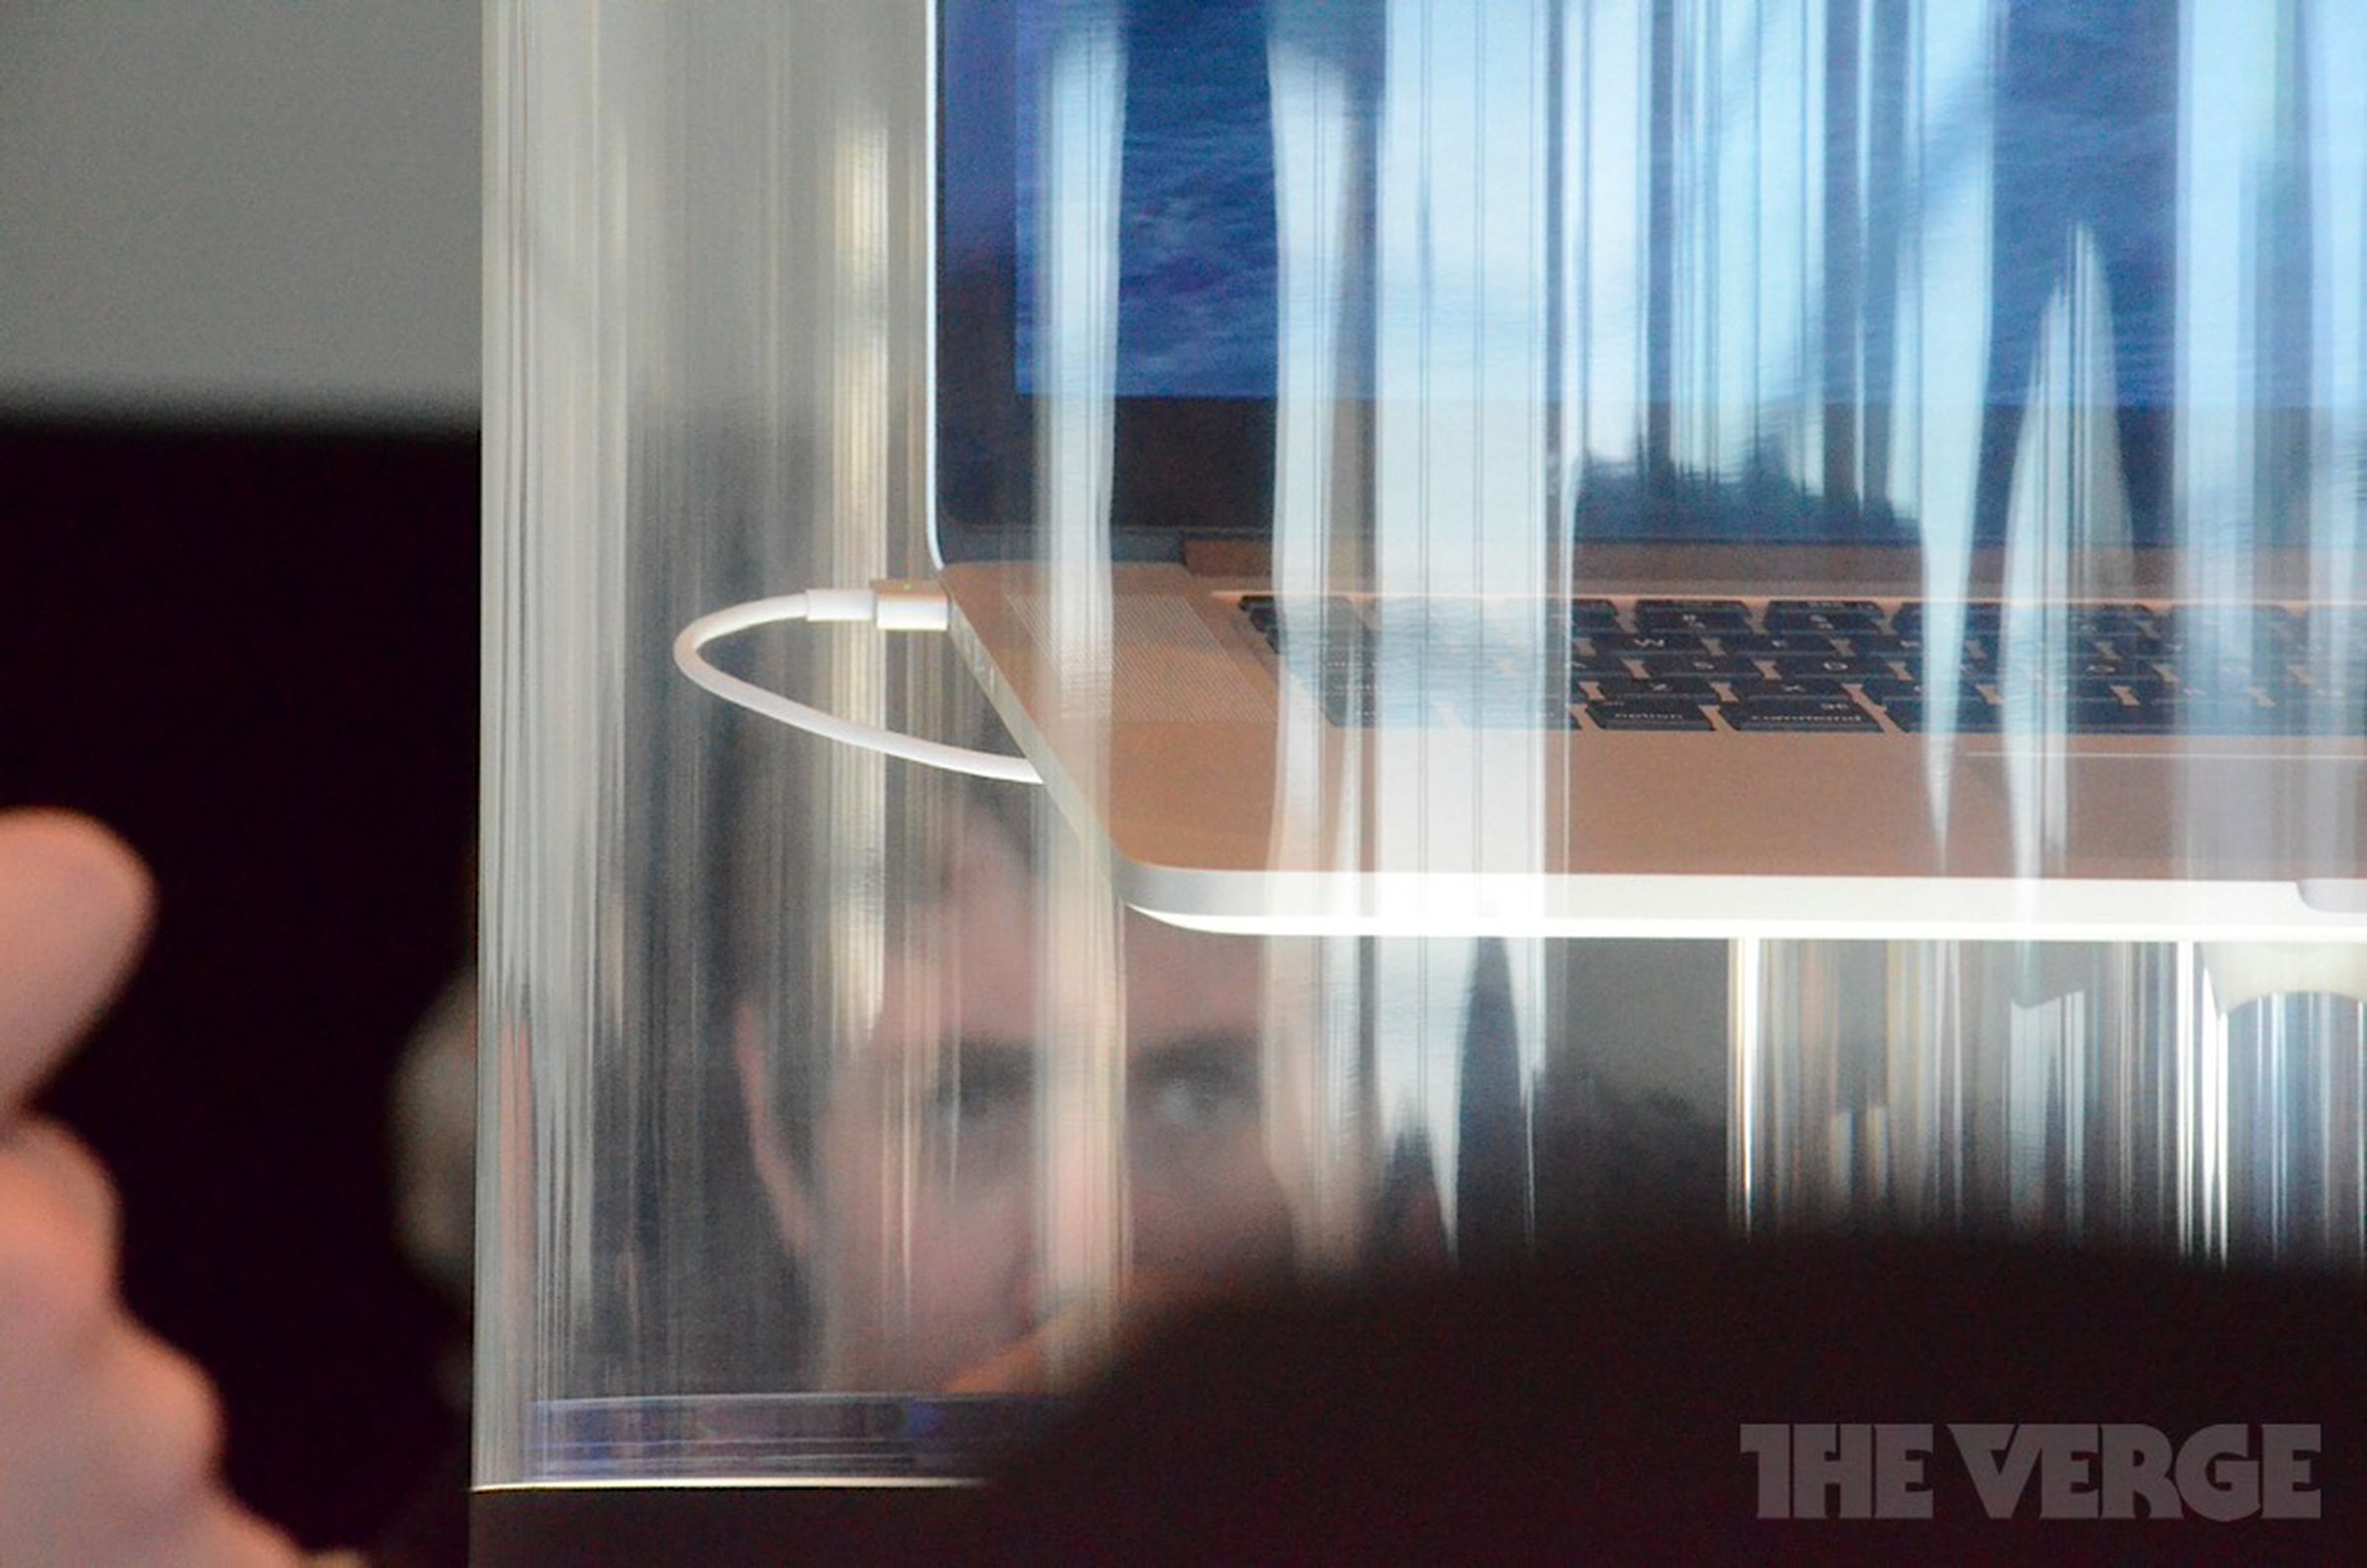 Next generation MacBook Pro with Retina display first look!